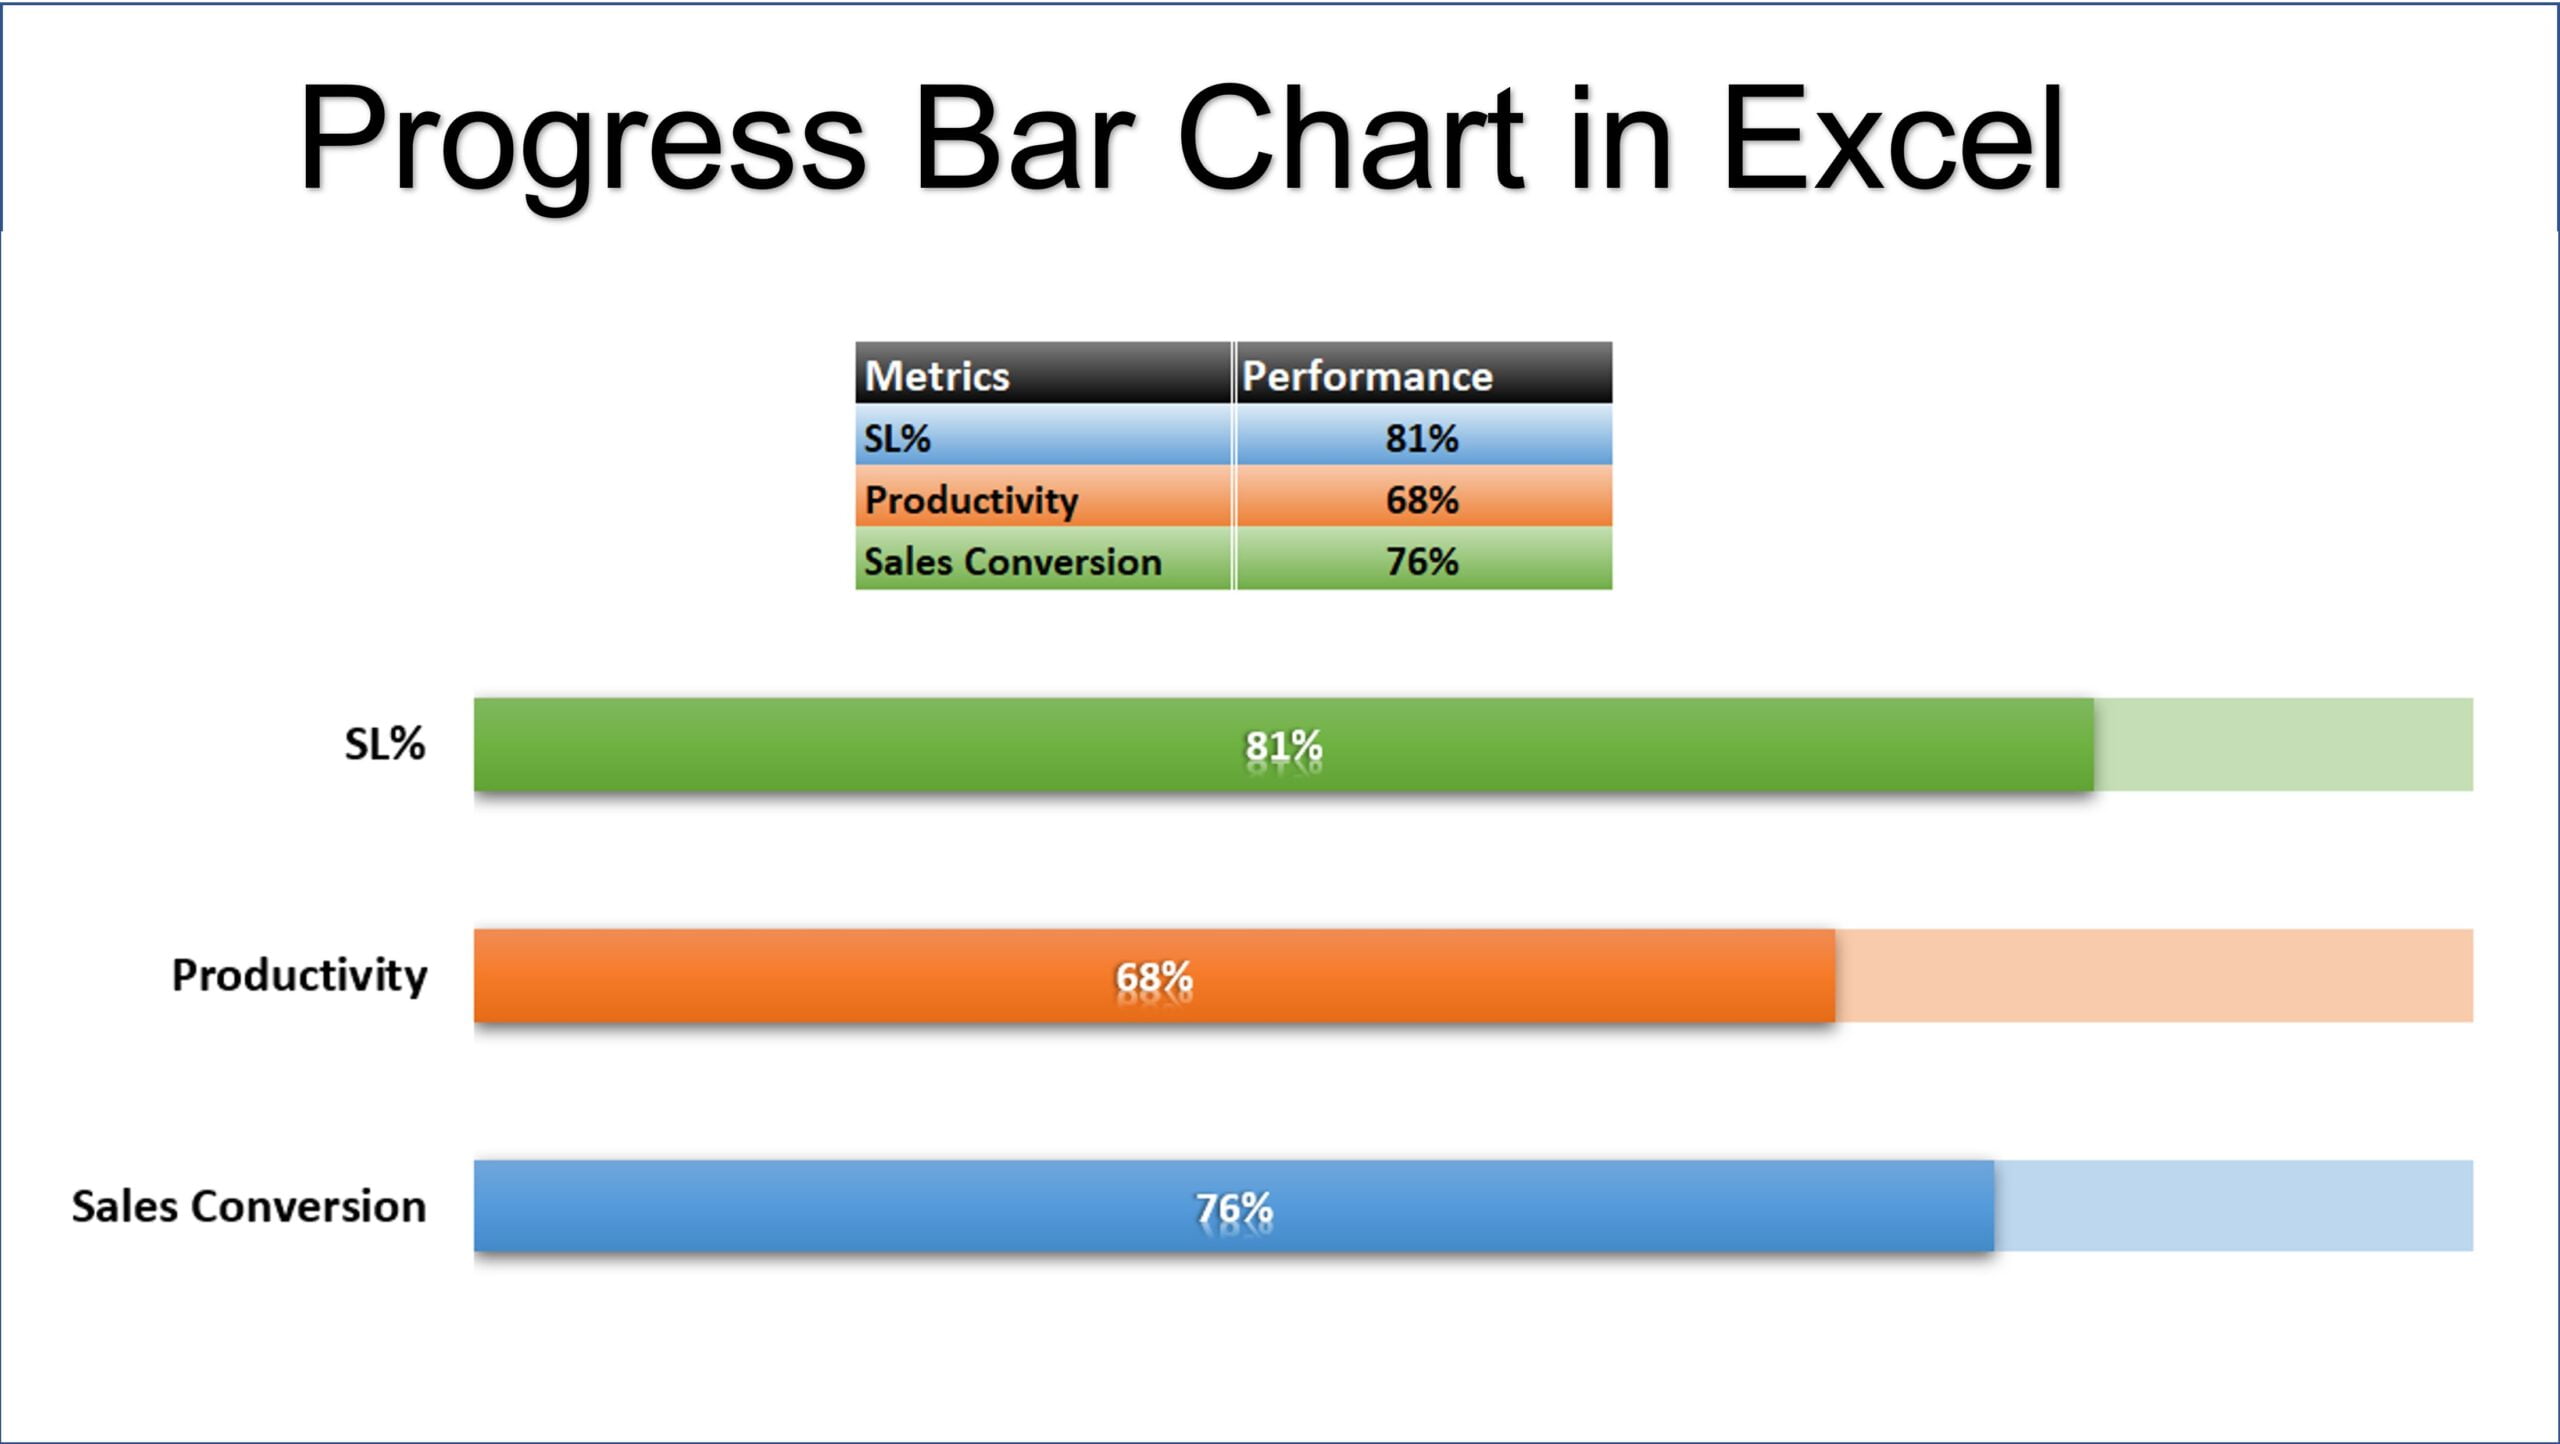 Progress Bar Chart in Excel